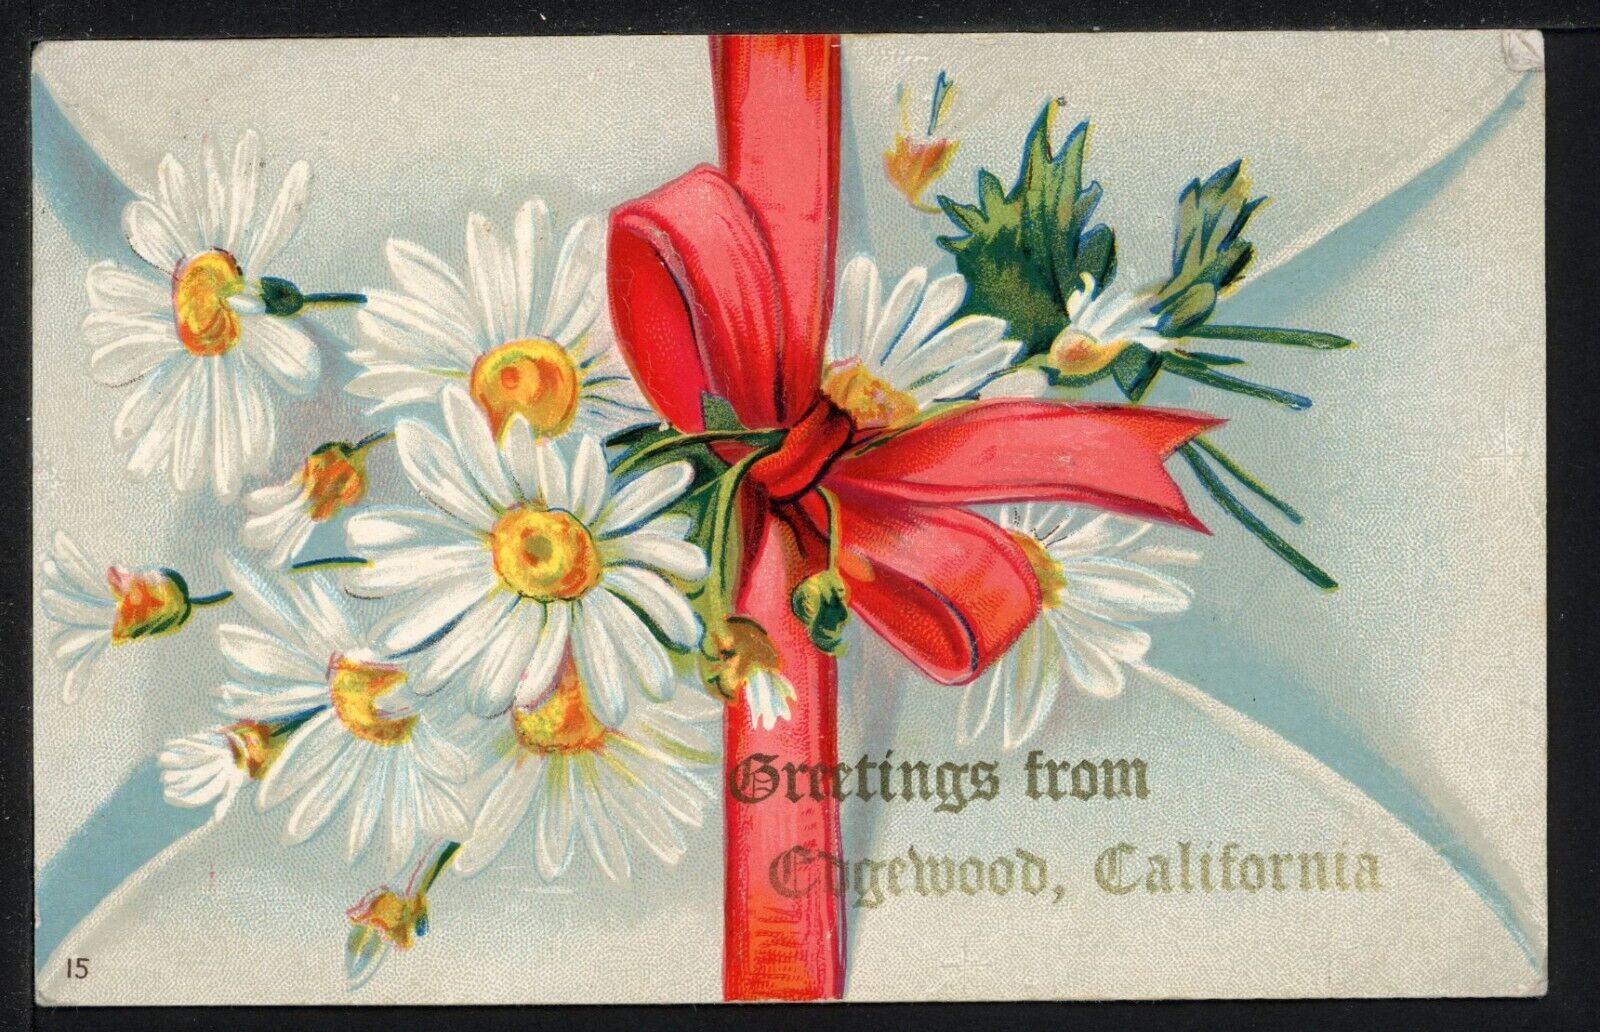 1910 Greetings from Edgewood California Embossed Vintage Postcard M317a